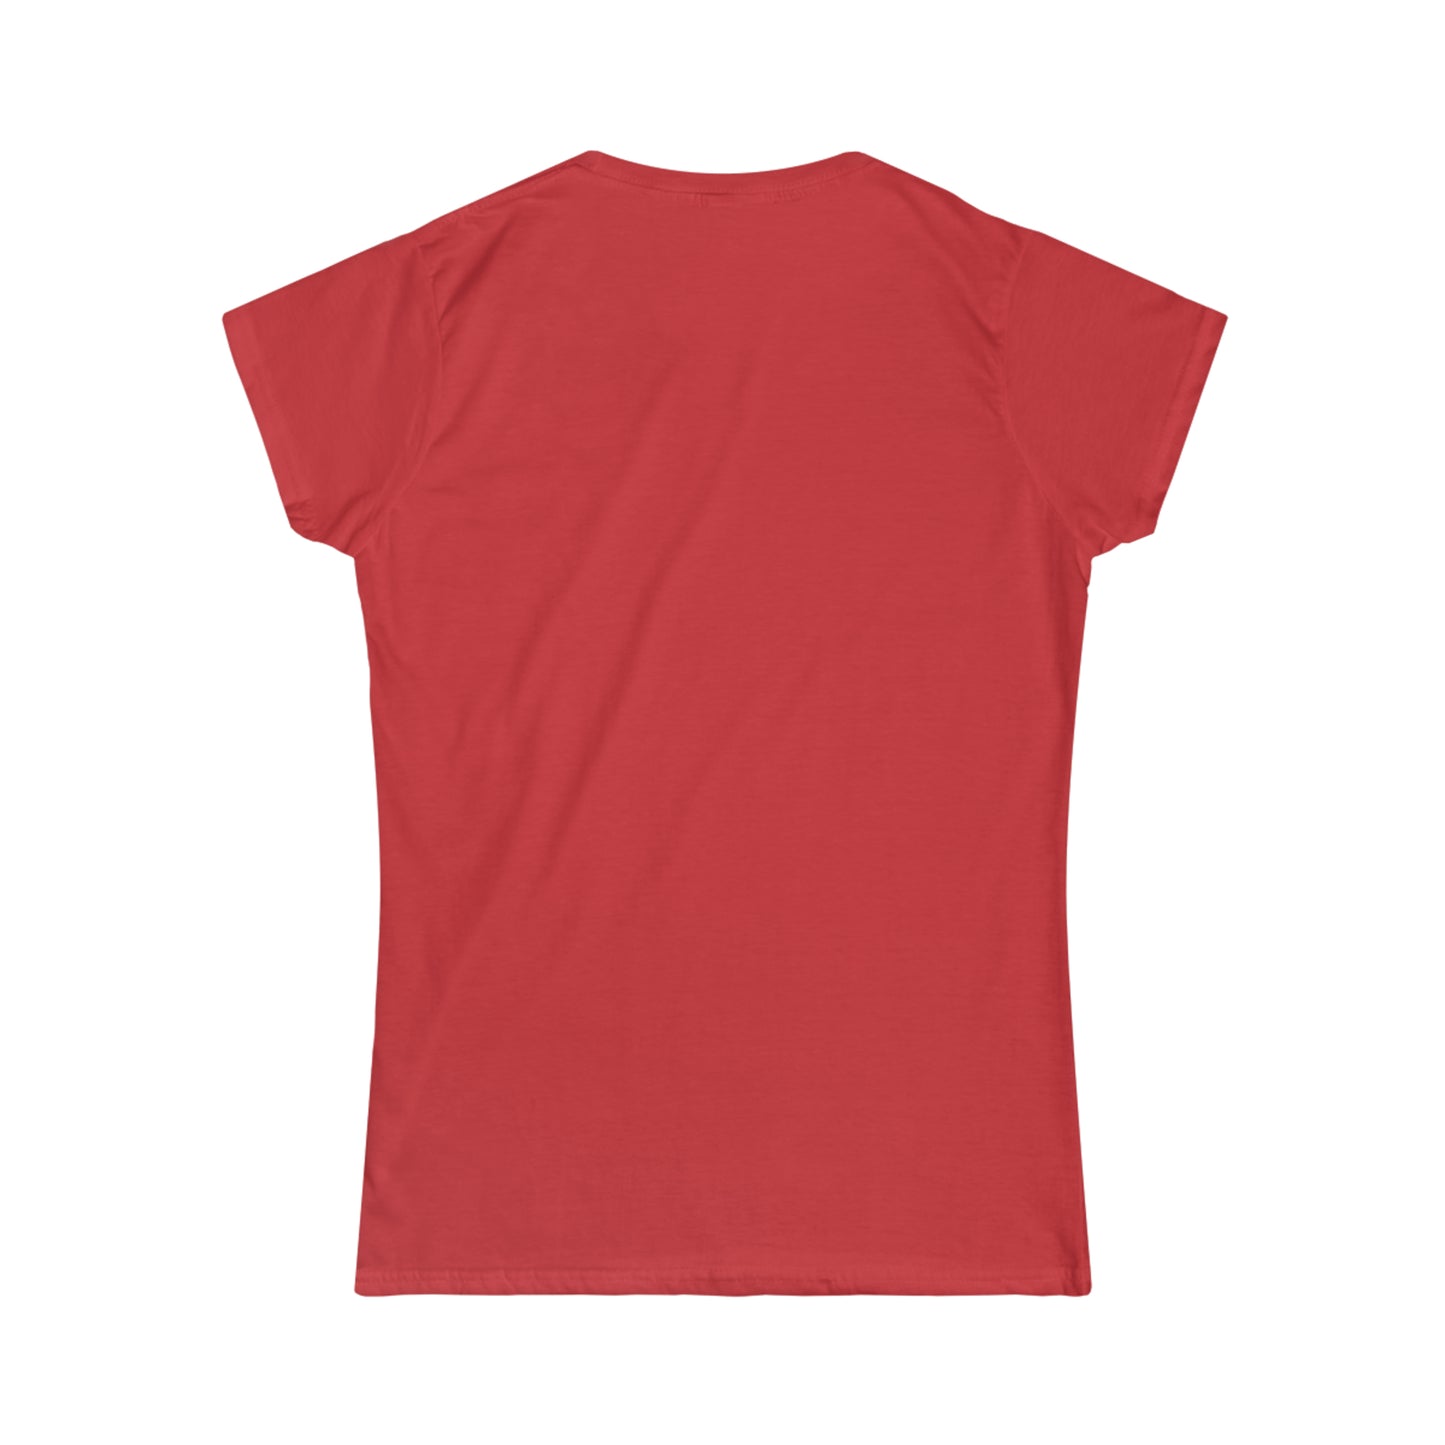 Hoy voy a liarla Parda! - Camiseta de Mujer / Women's Softstyle Tee